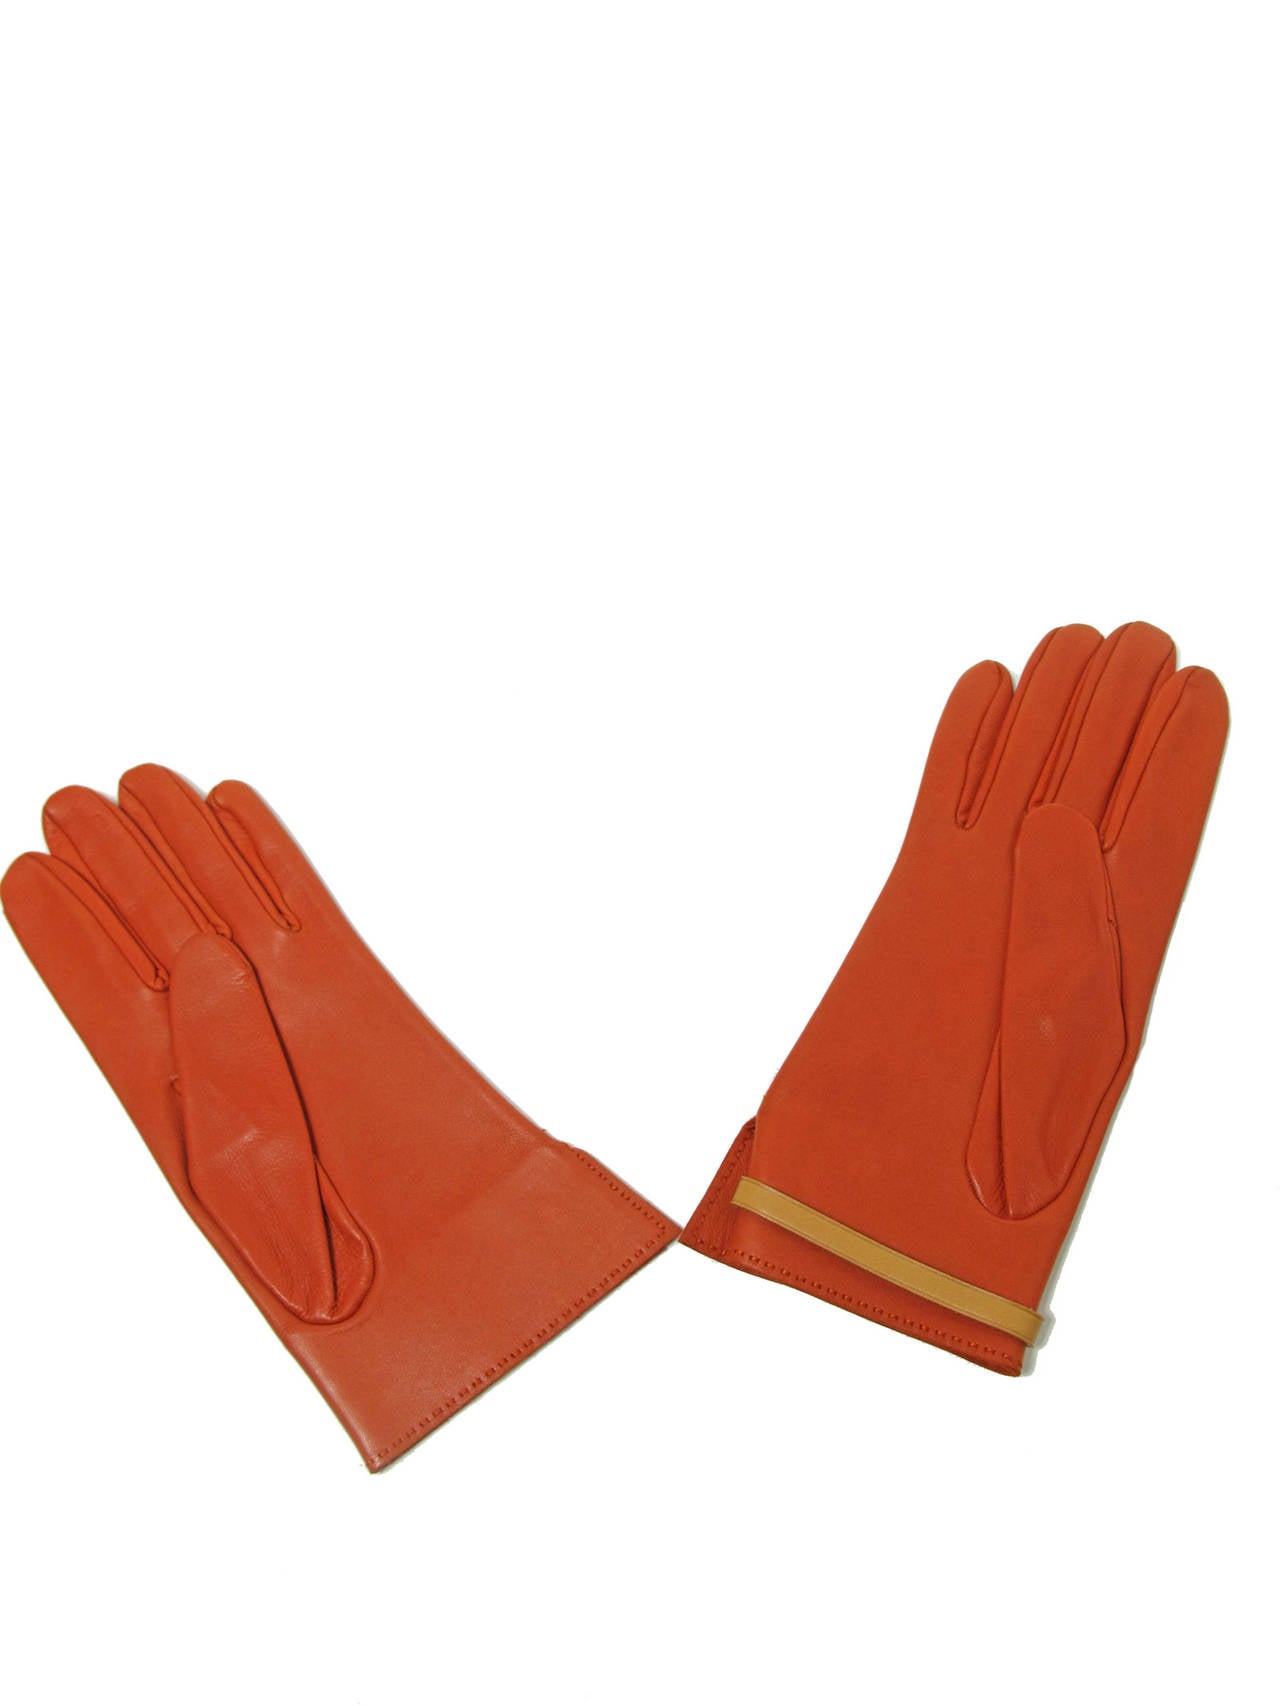 Hermes soft orange women's kidskin and lambskin gloves size 7 1/2

8 1/2